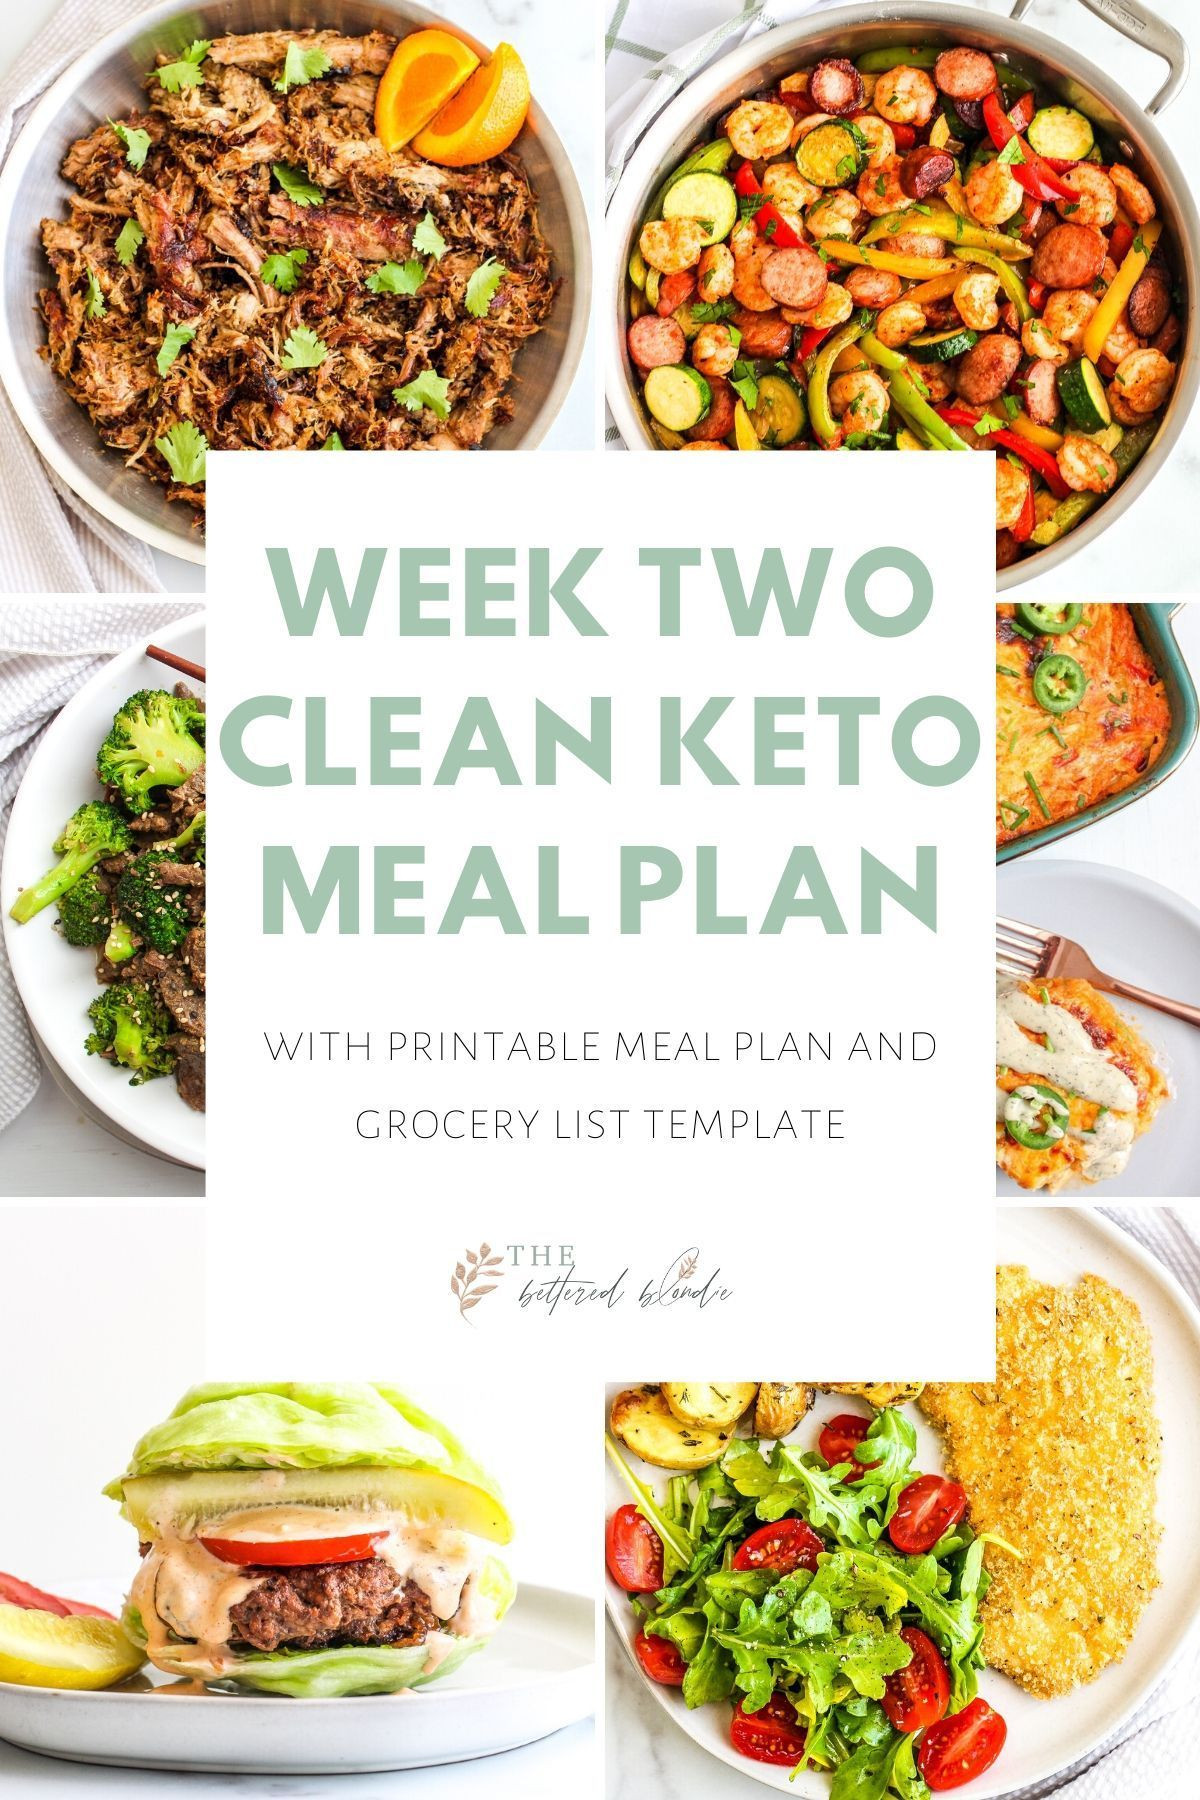 Clean Keto Meal Plan Recipes
 Week Two Clean Keto Meal Plan